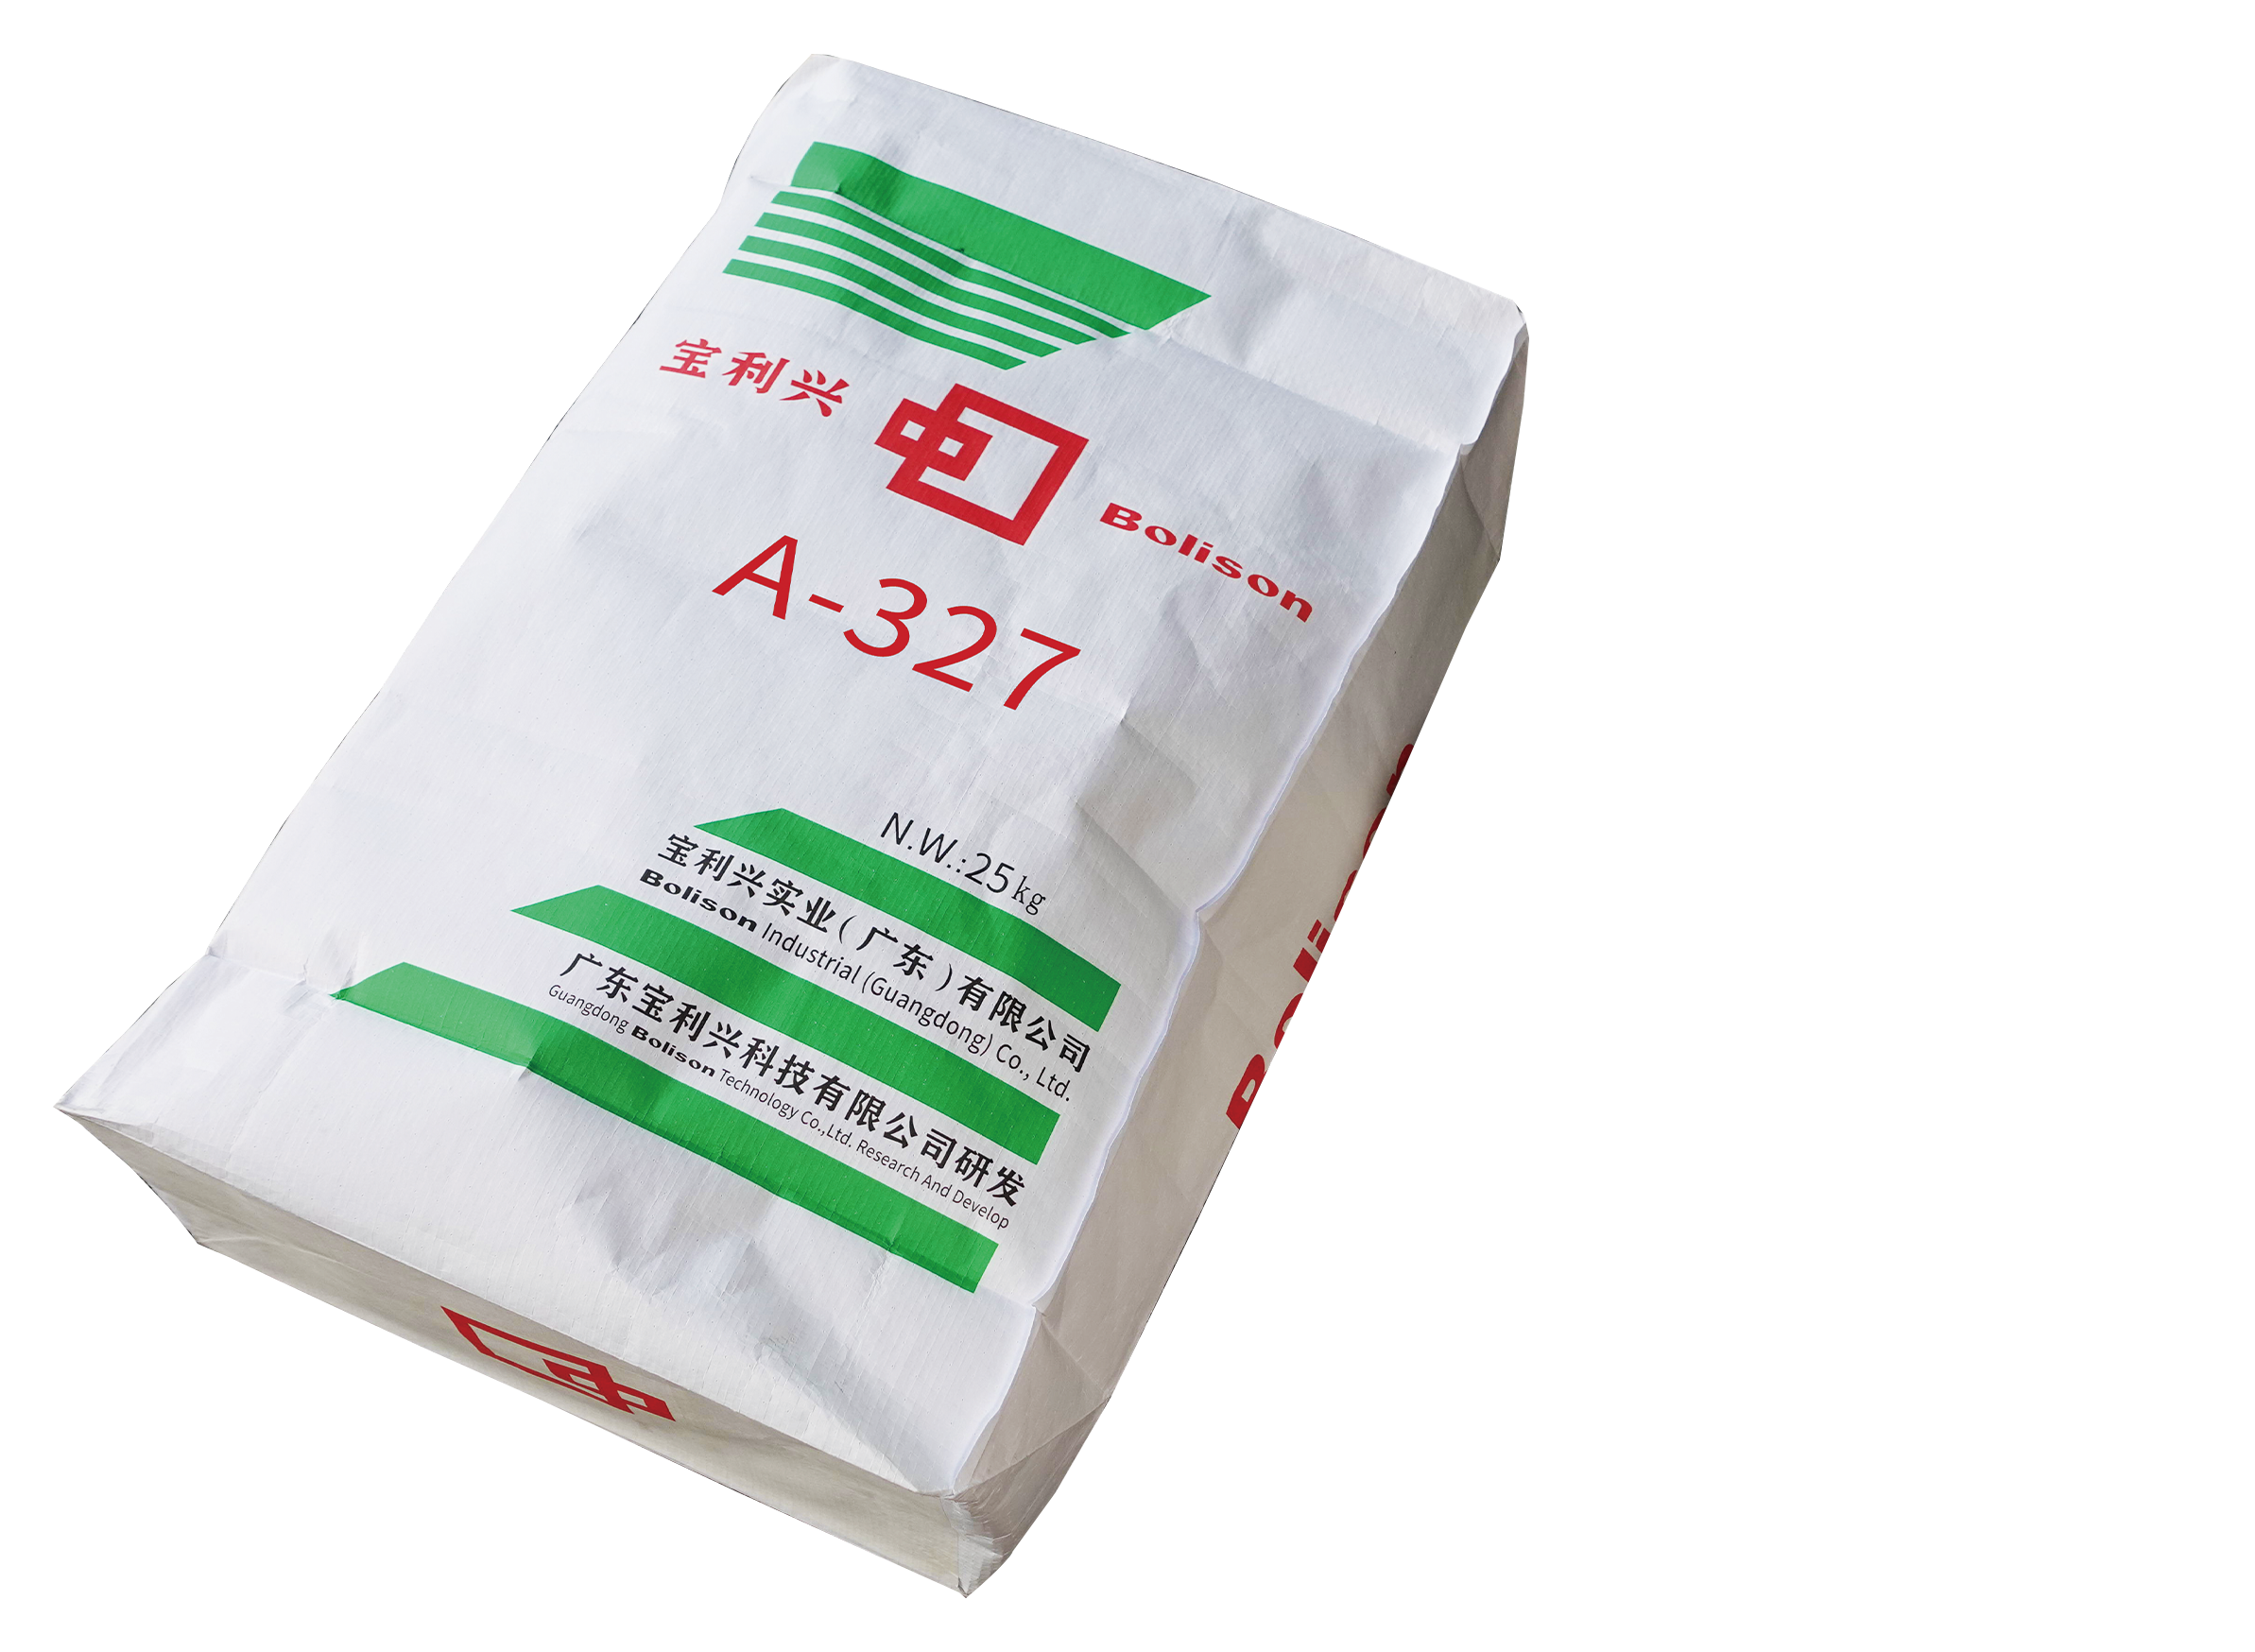 Environmentally Friendly Calcium Zinc Stabilizer A-327